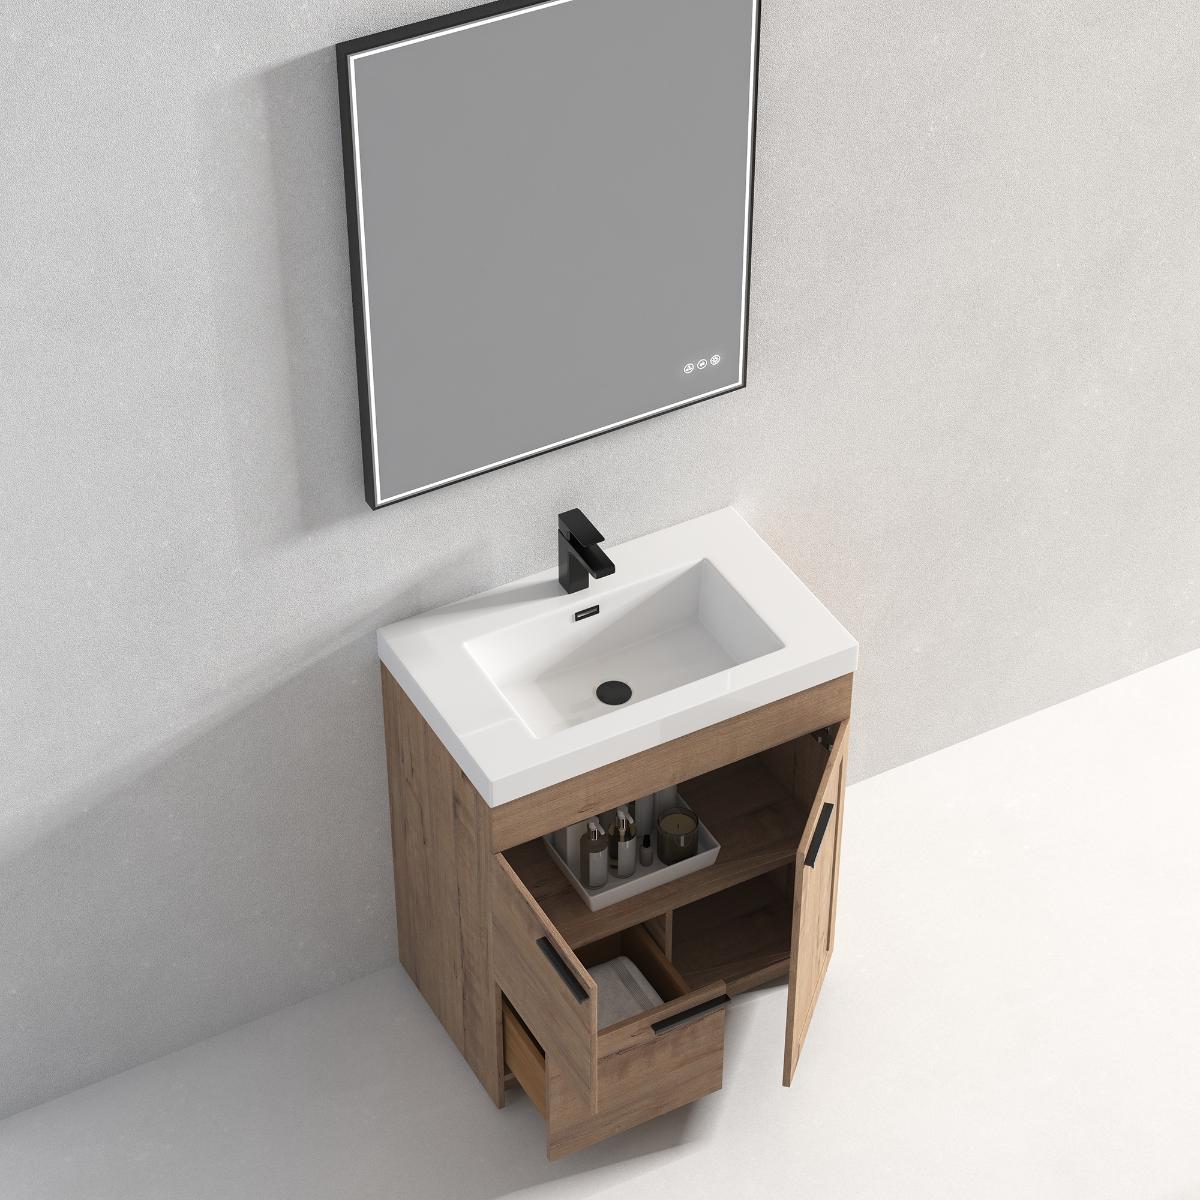 Hanover 30" Bathroom Vanity  #size_30"  #color_classic oak